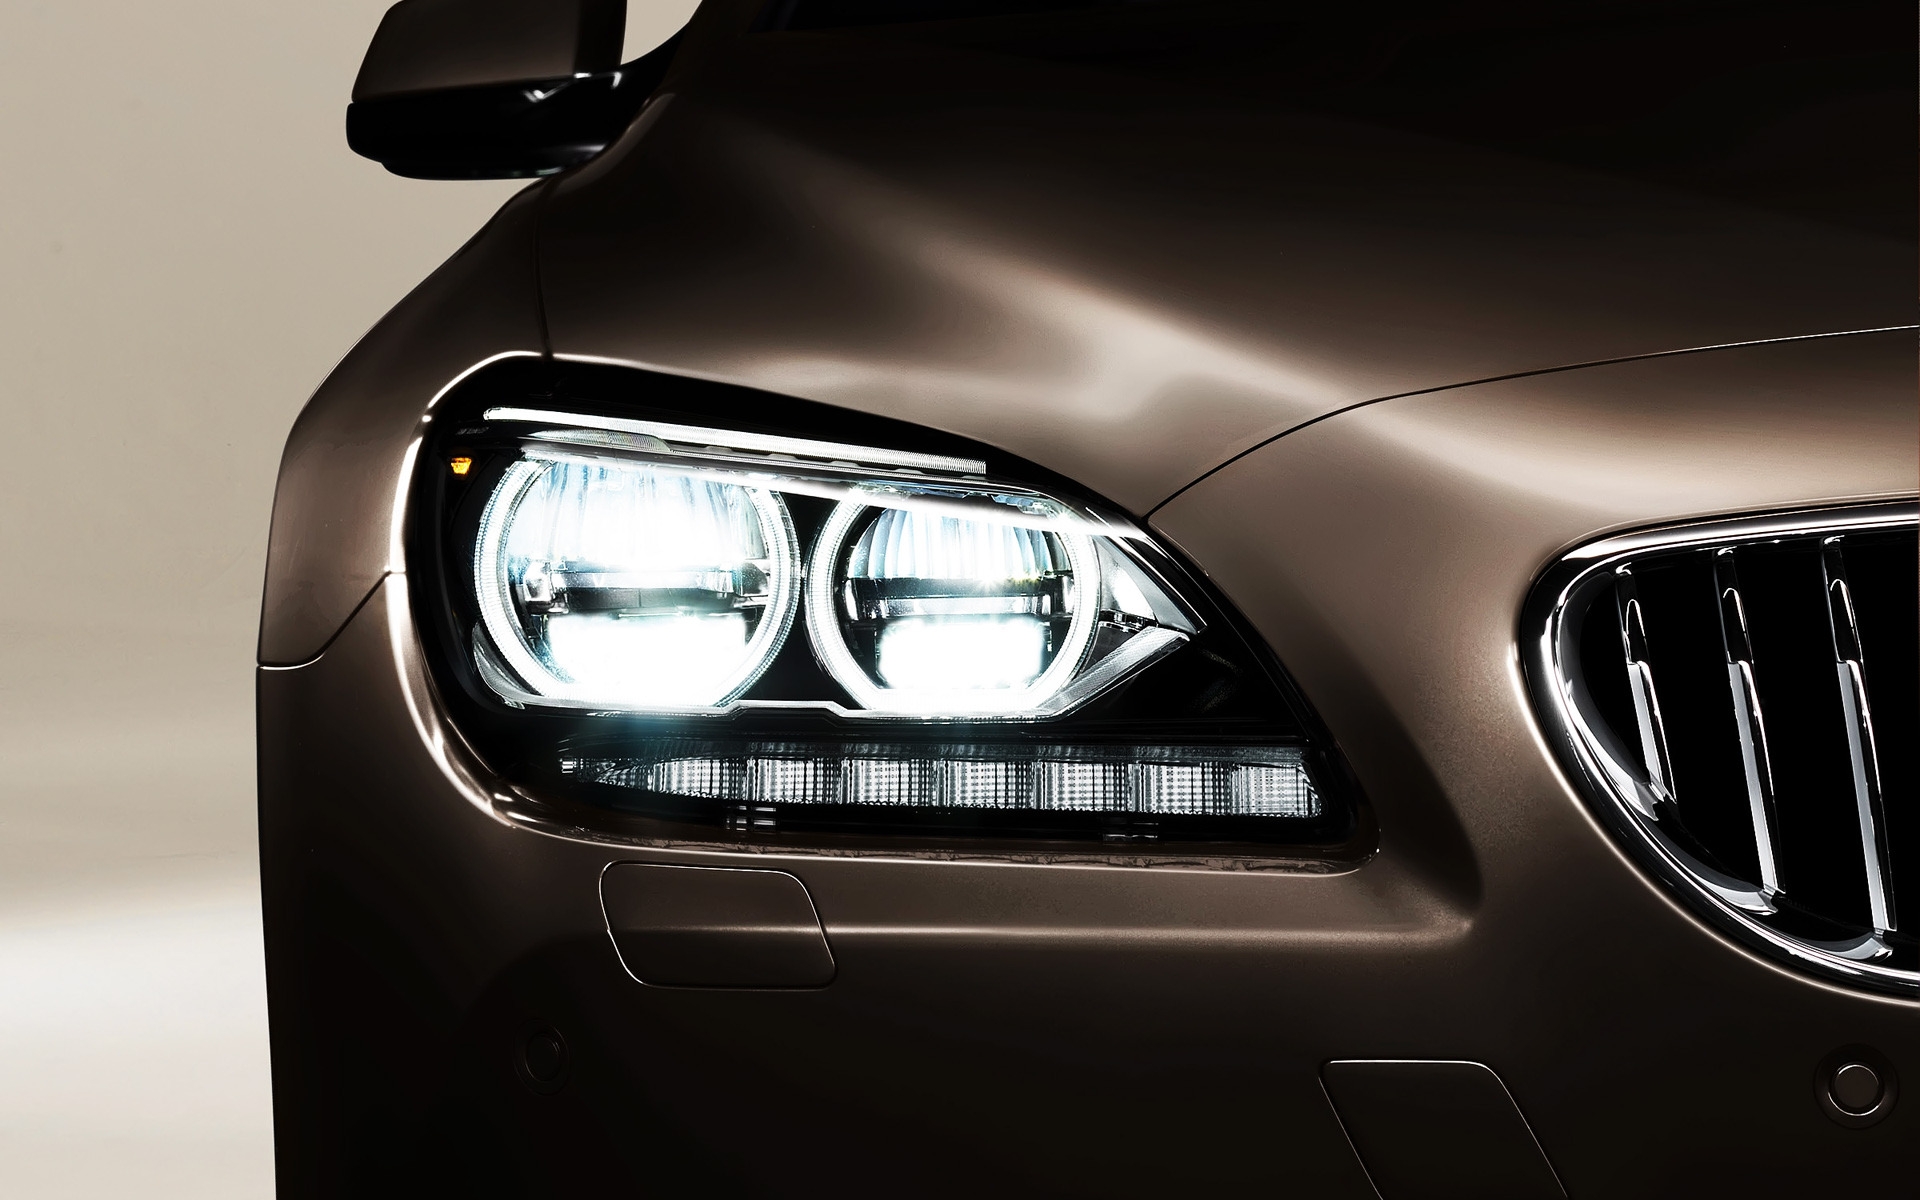 BMW 6 Series 2013 Headlight for 1920 x 1200 widescreen resolution